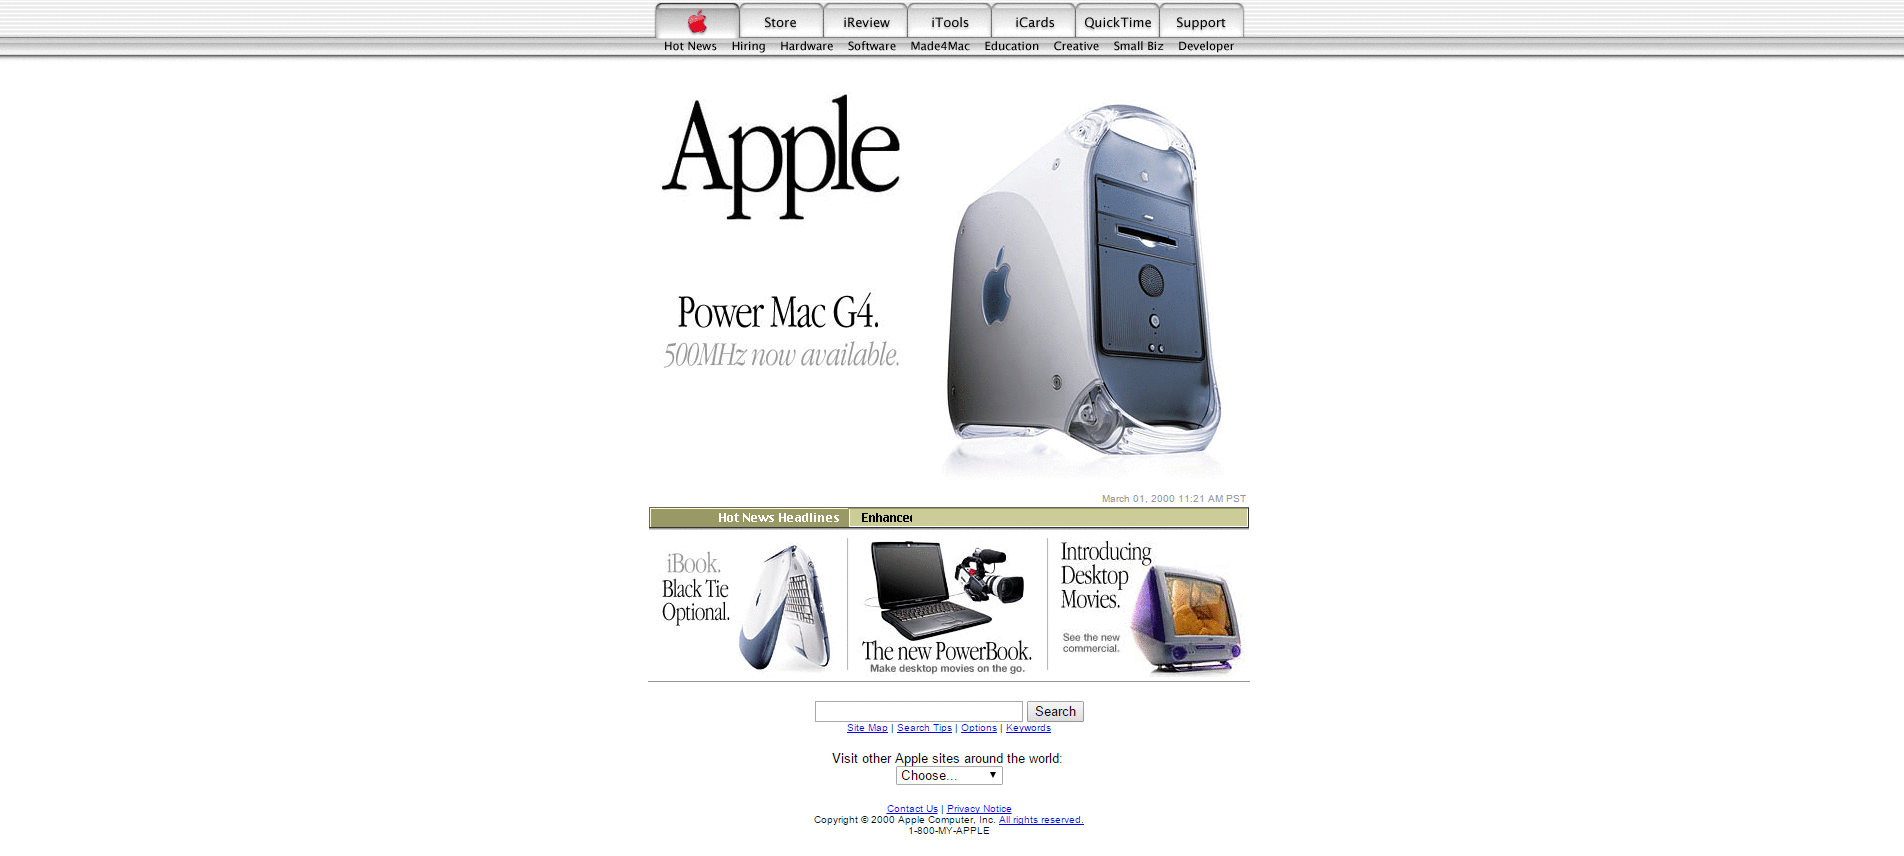 apple.com Website Design in 2000